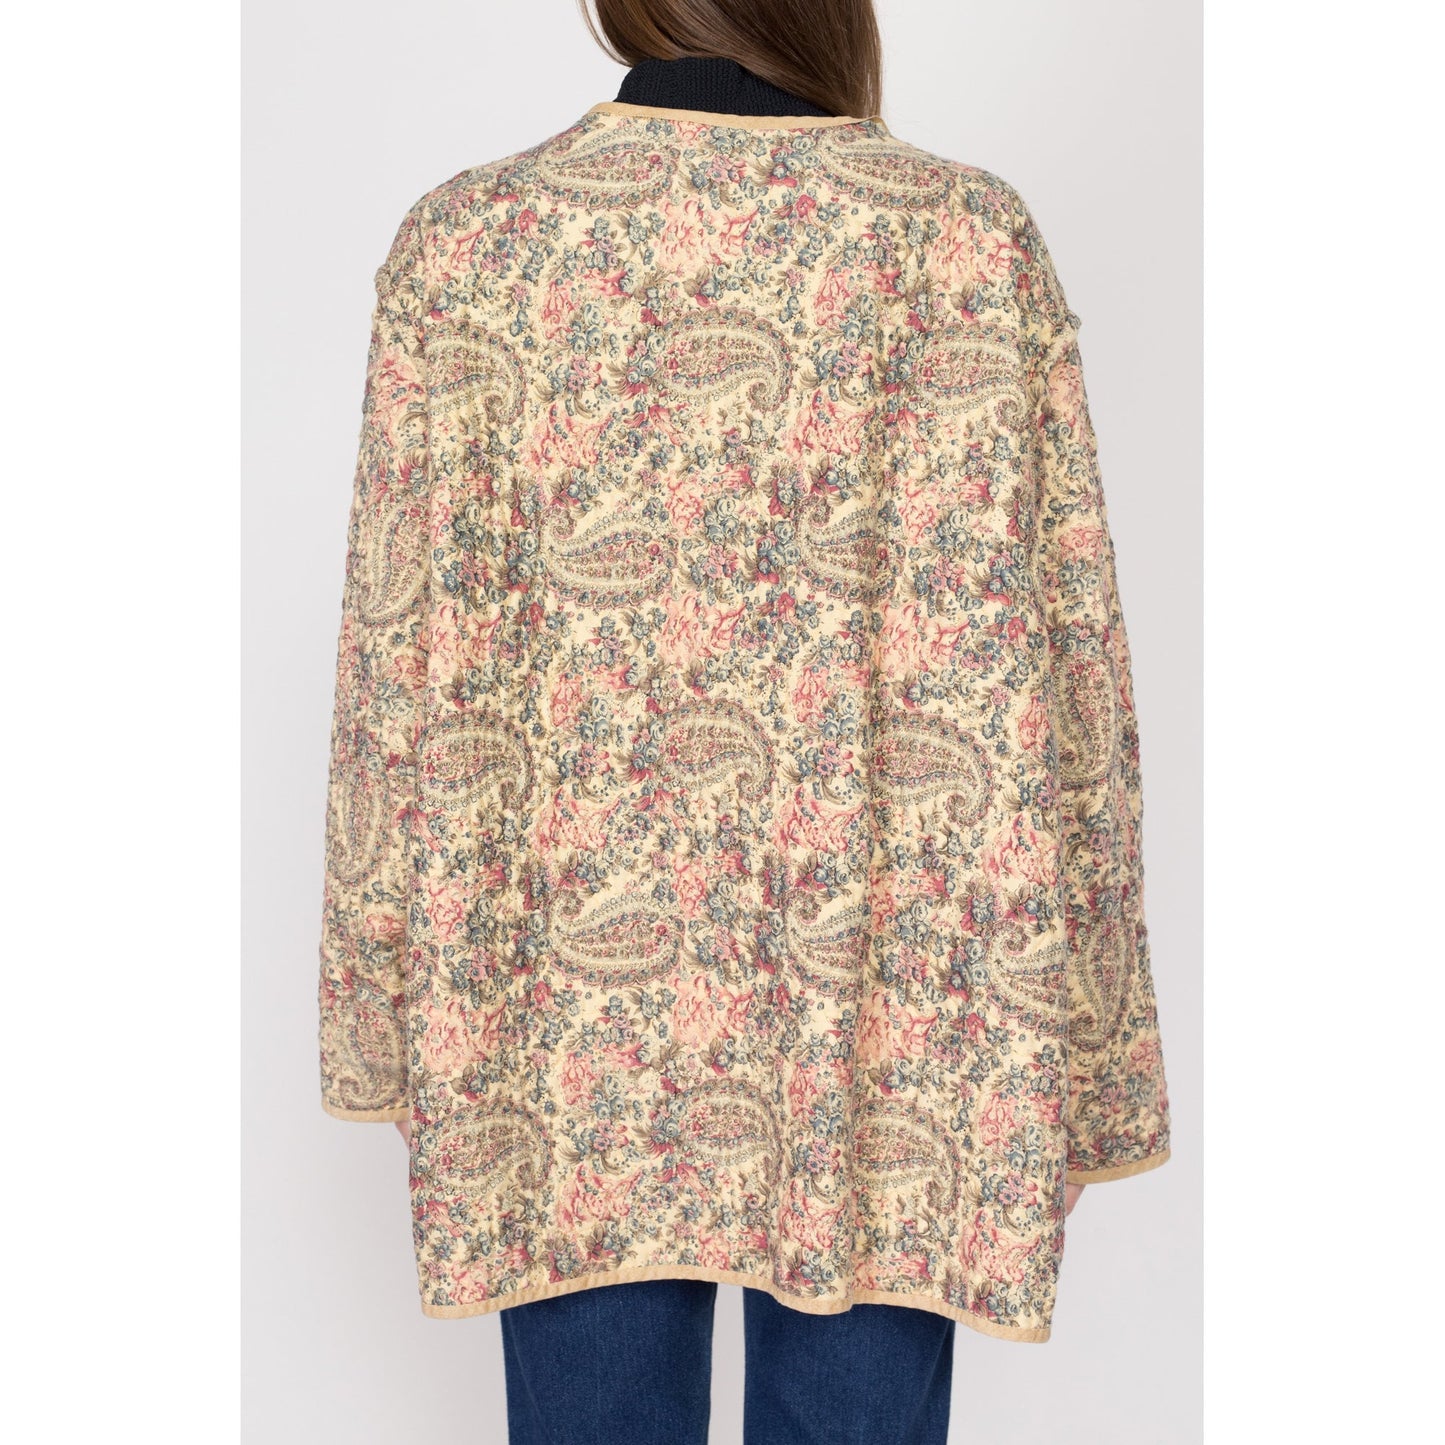 XL-3XL 70s Boho Reversible Patchwork Jacket | Vintage Floral Paisley Print Lightweight Quilted Hippie Coat